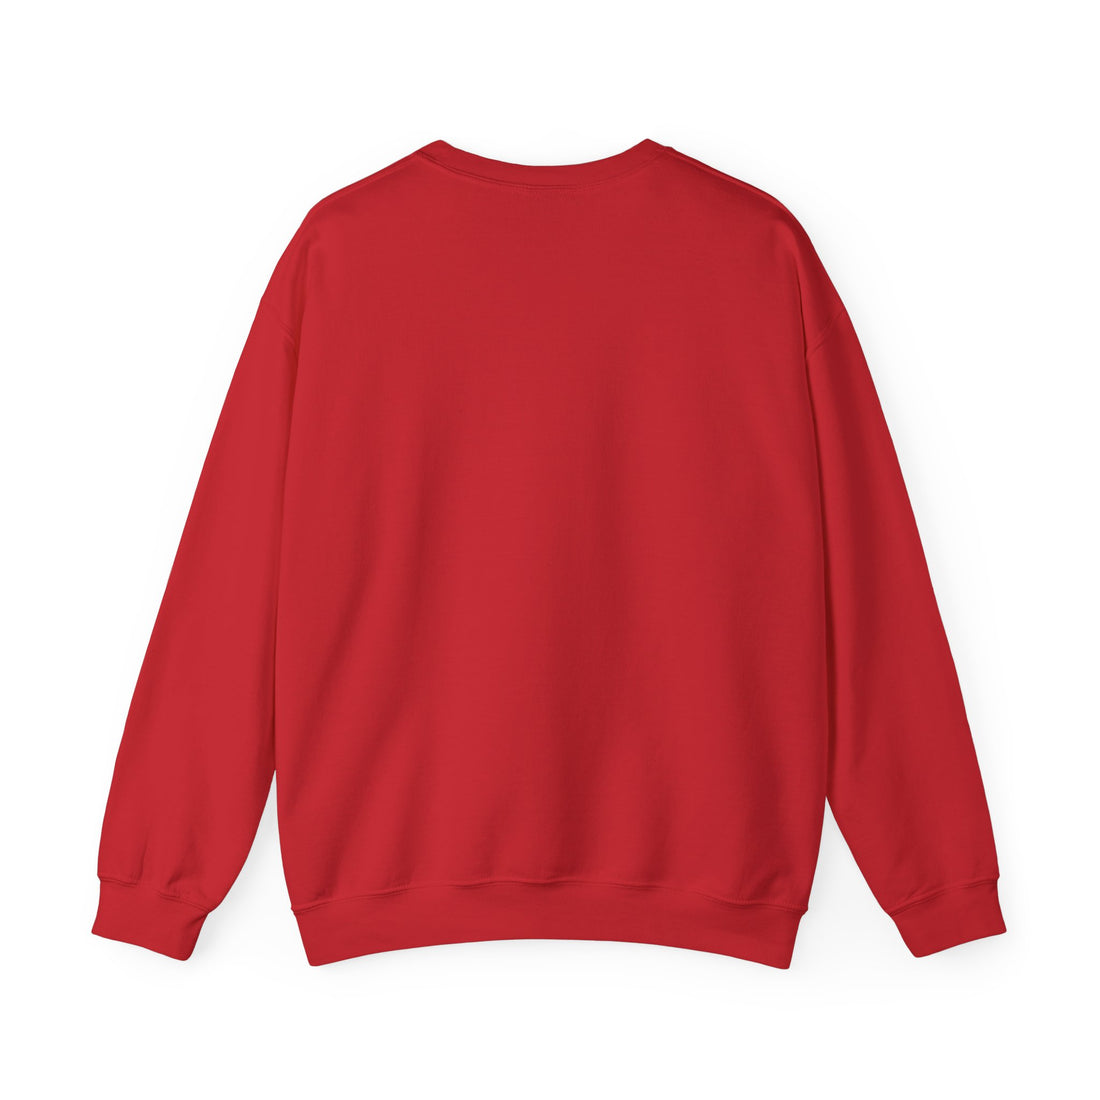 Algeria x Streetwear Series - Crewneck Sweatshirt